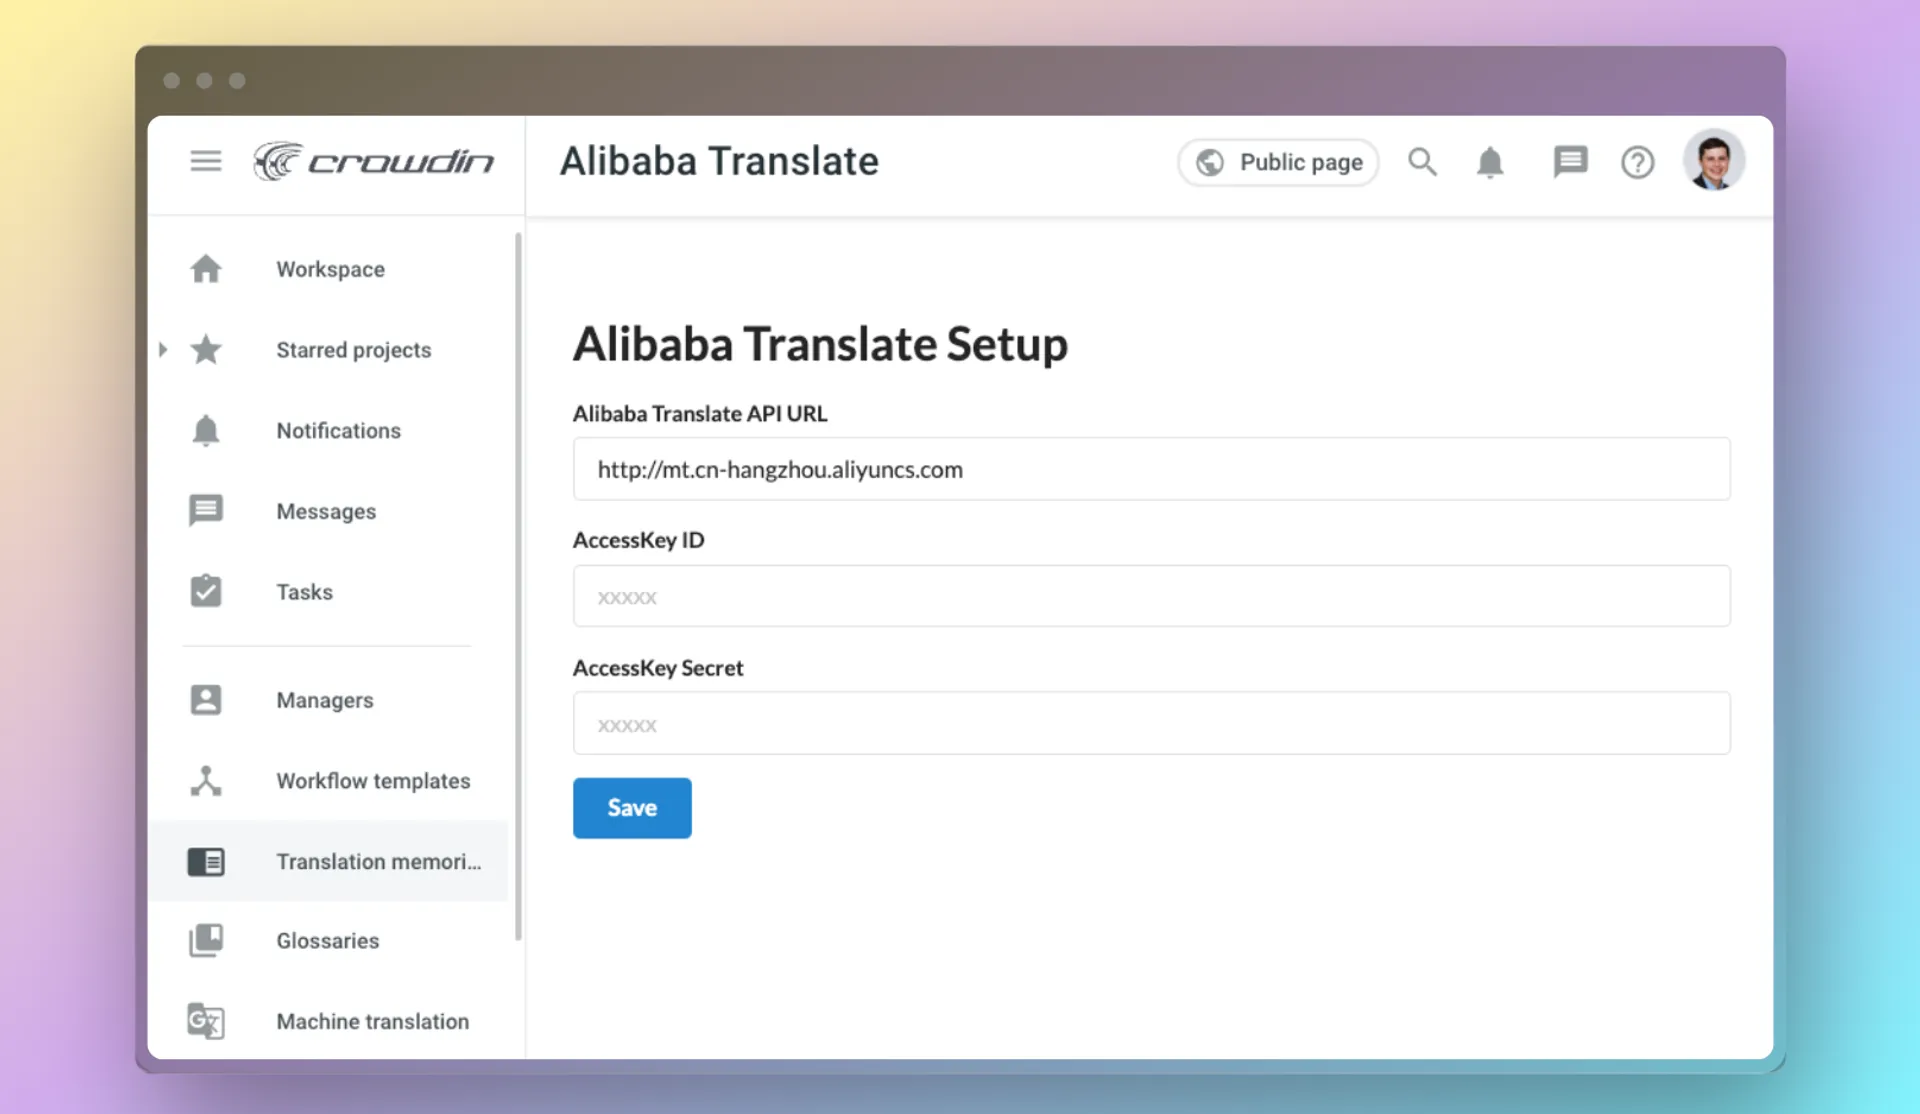 Alibaba Translate in Crowdin